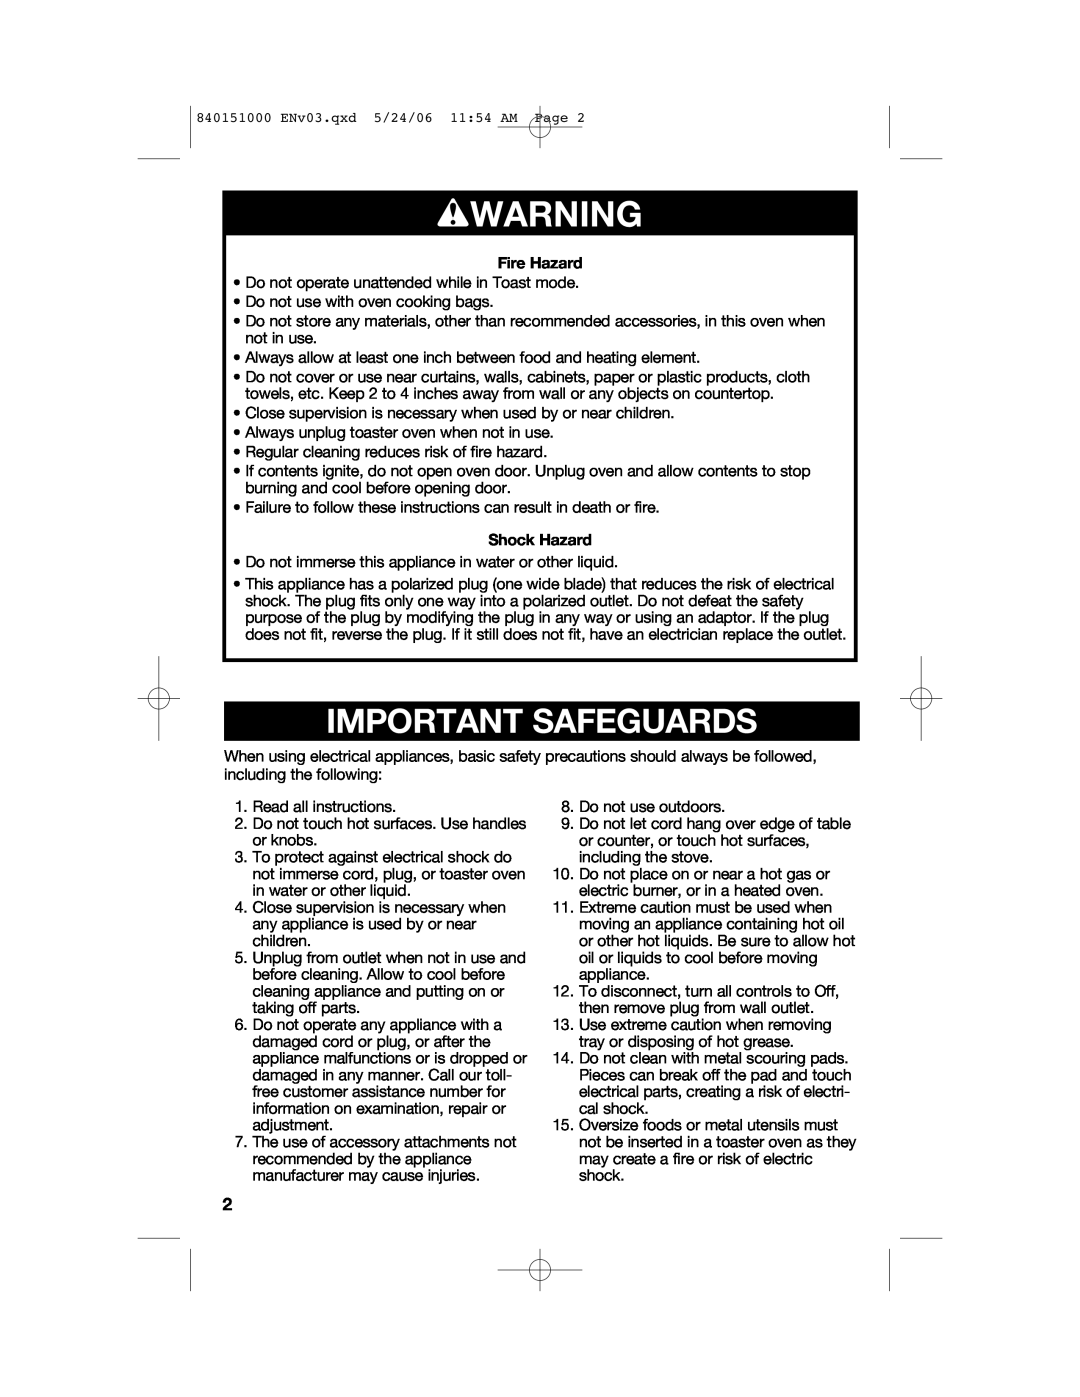 Hamilton Beach 840151000 manual wWARNING, Important Safeguards, Fire Hazard, Shock Hazard 